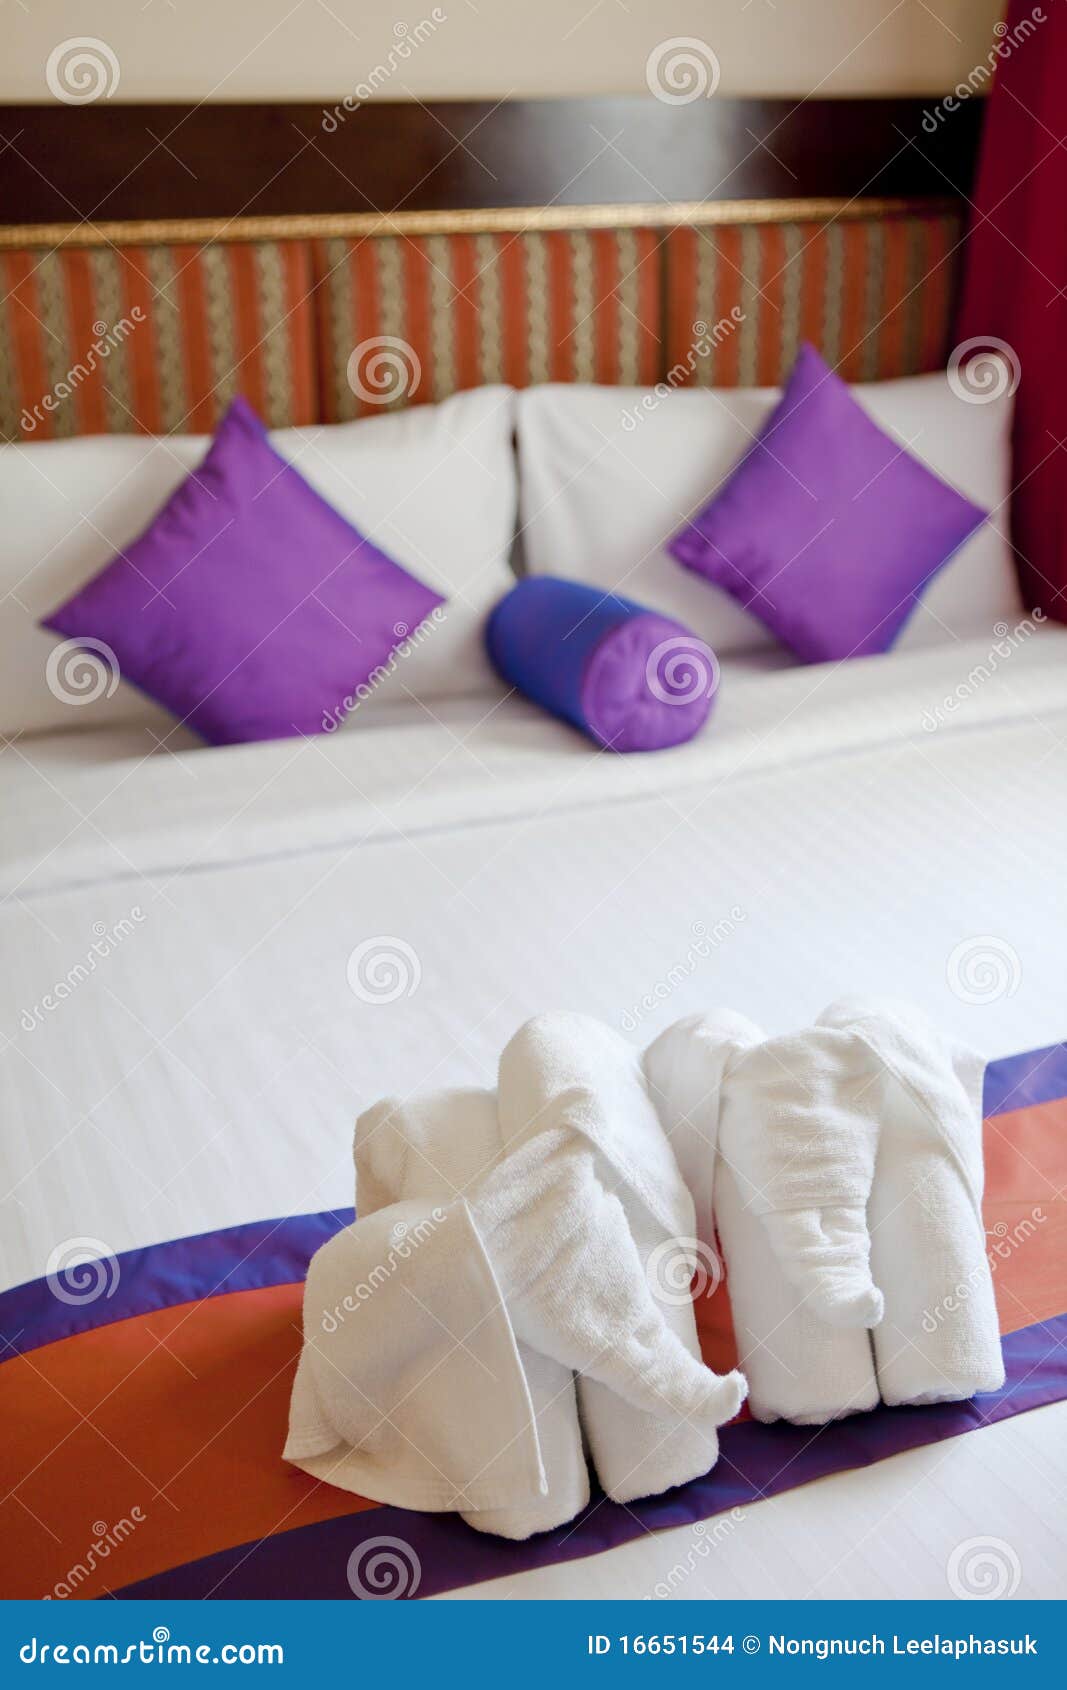 Полотенце на кровати. Украшения из полотенец на кровати. Украшение кровати полотенцем. Полотенца на кровати в отеле. Цветок из полотенца на кровать.